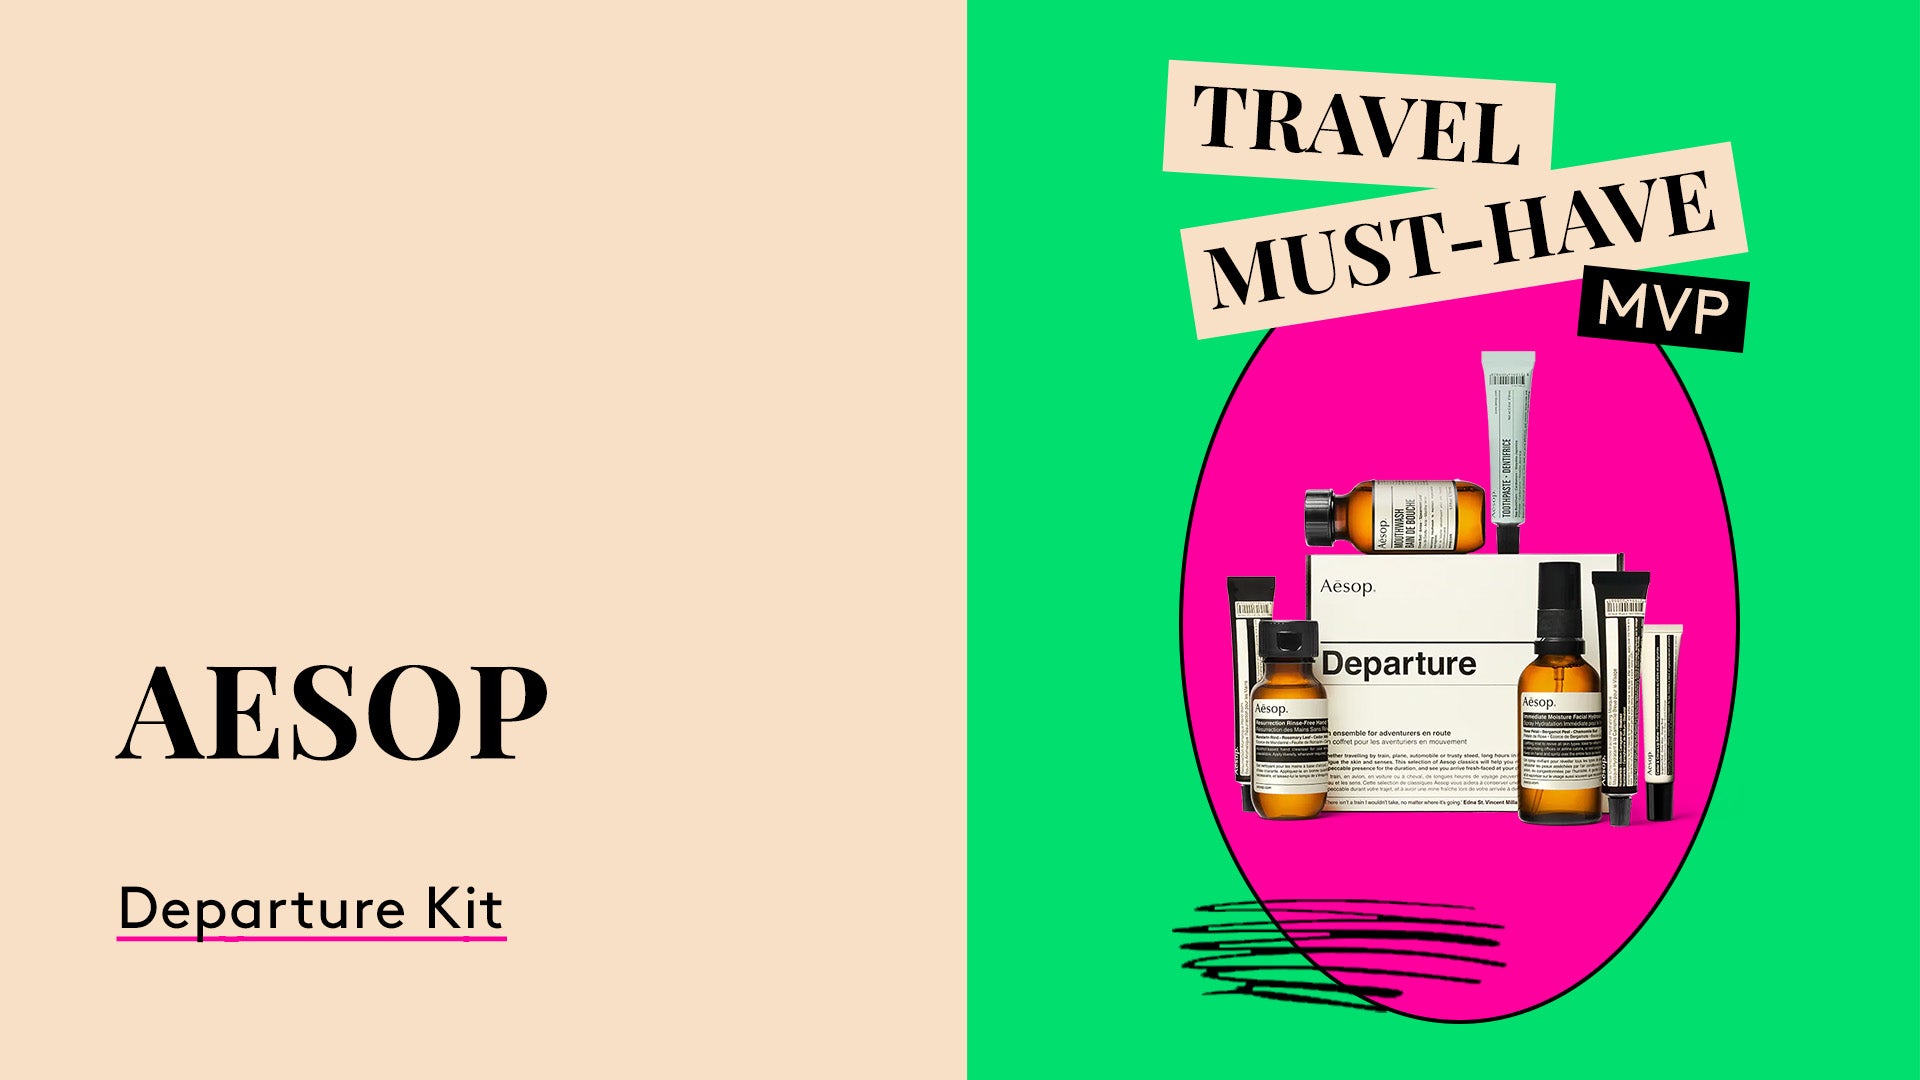 Travel Must-Have MVP. Aesop Departure Kit.